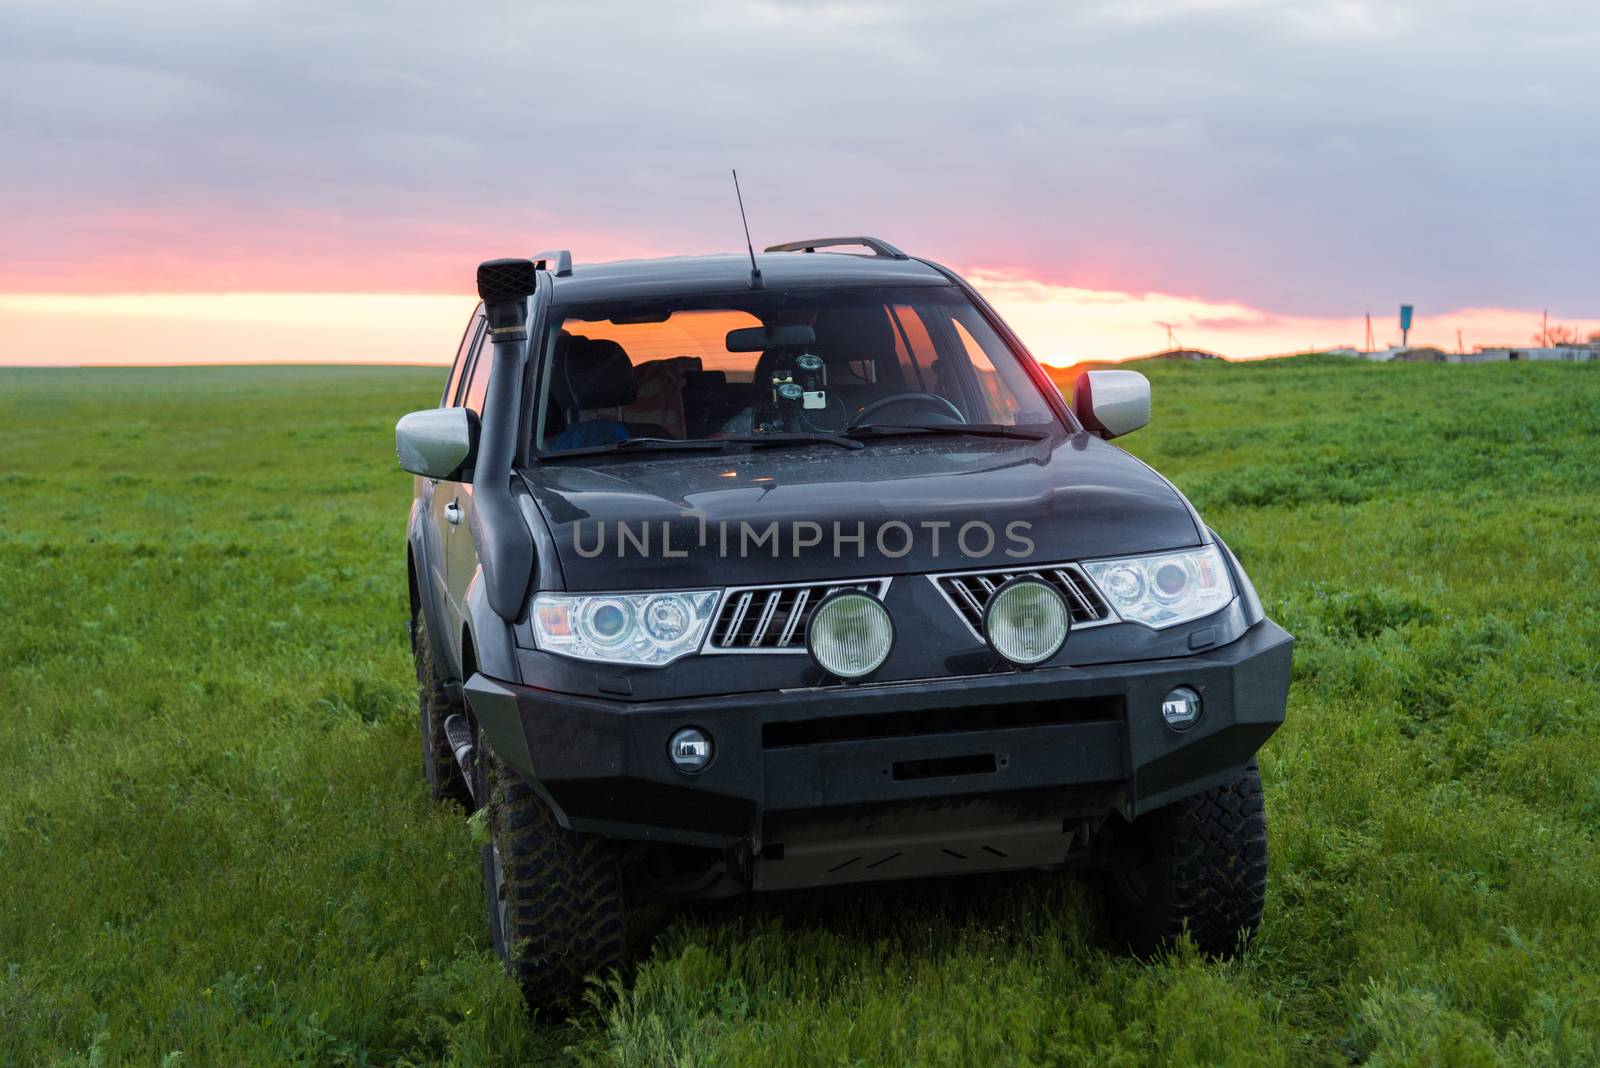 SUV Mitsubishi Pajero Sport,  Kalmykia region, Russia. 04-22-2016